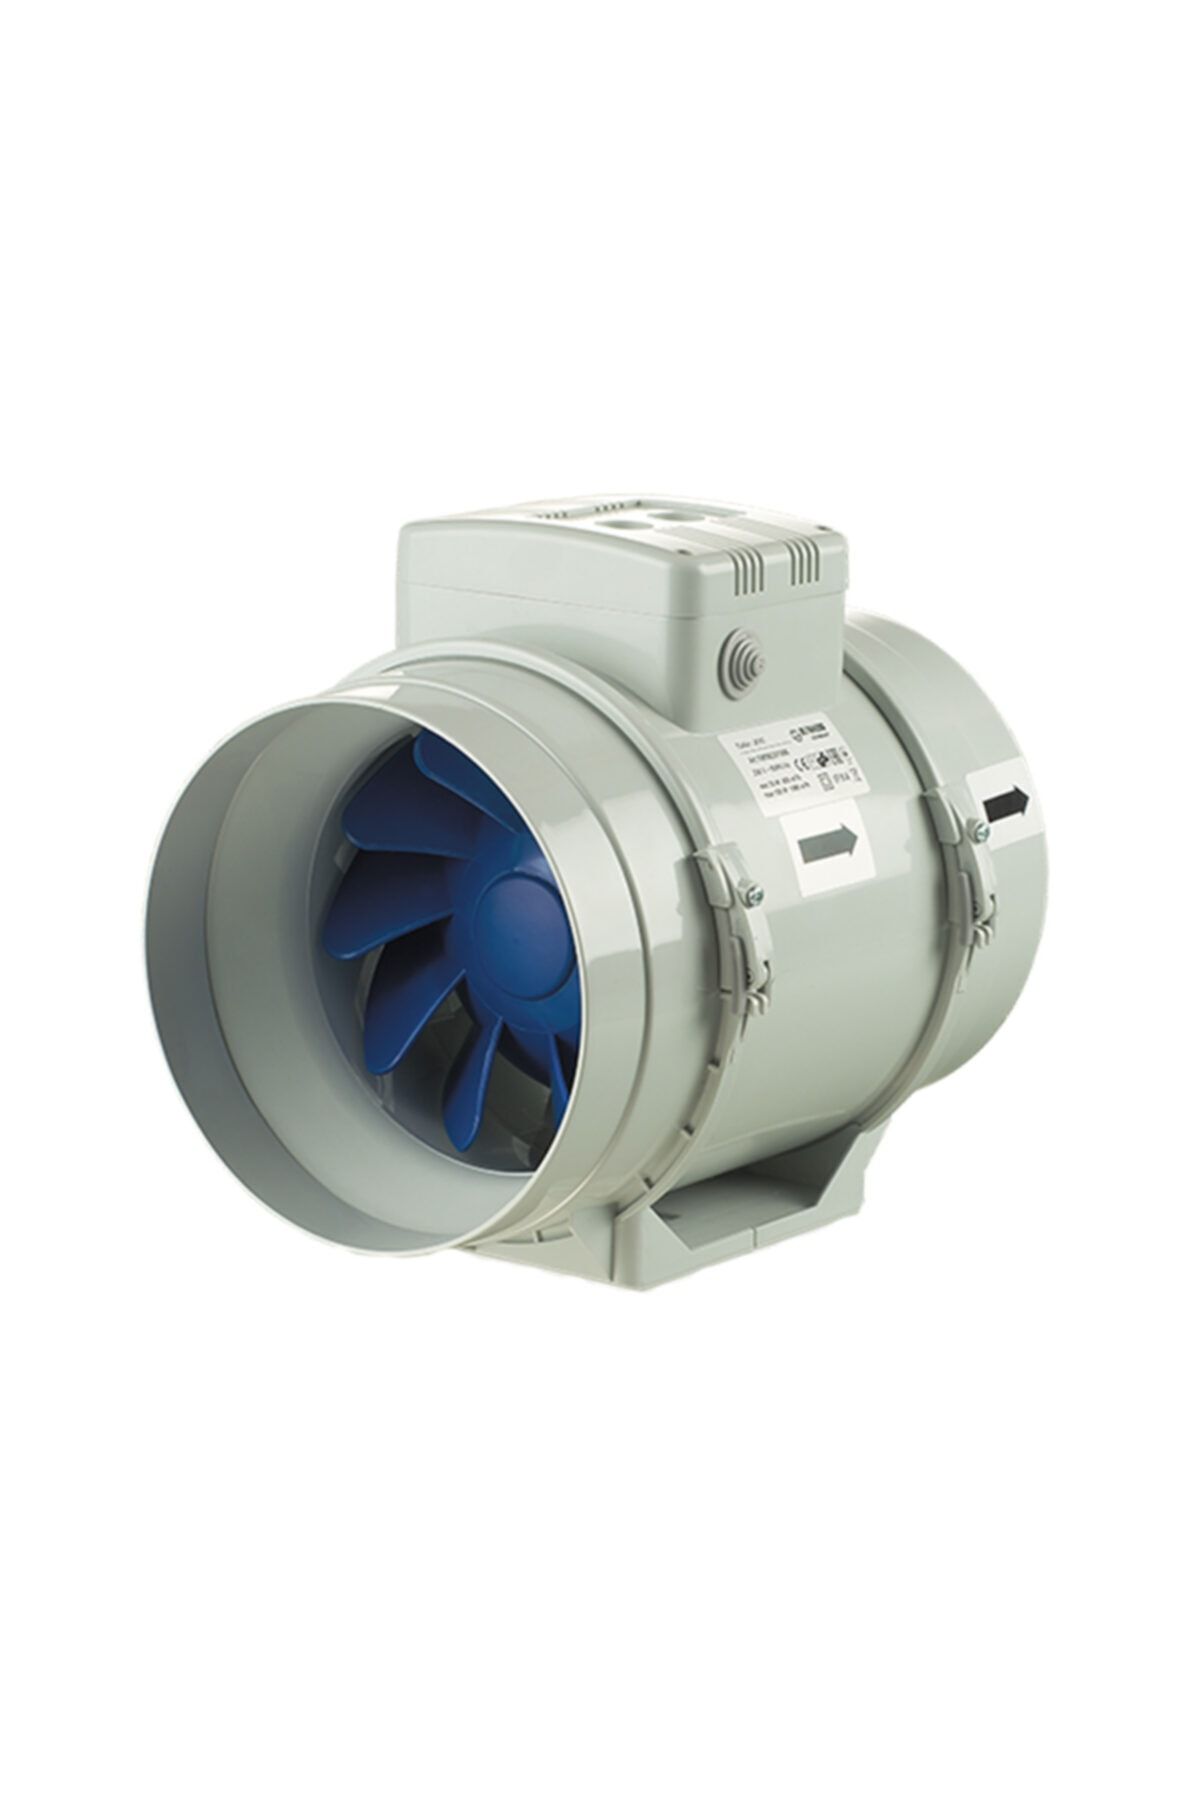 Blauberg Turbo 315 Kanal Tipi Karışık Akışlı Fan (1750-1420m³/h)